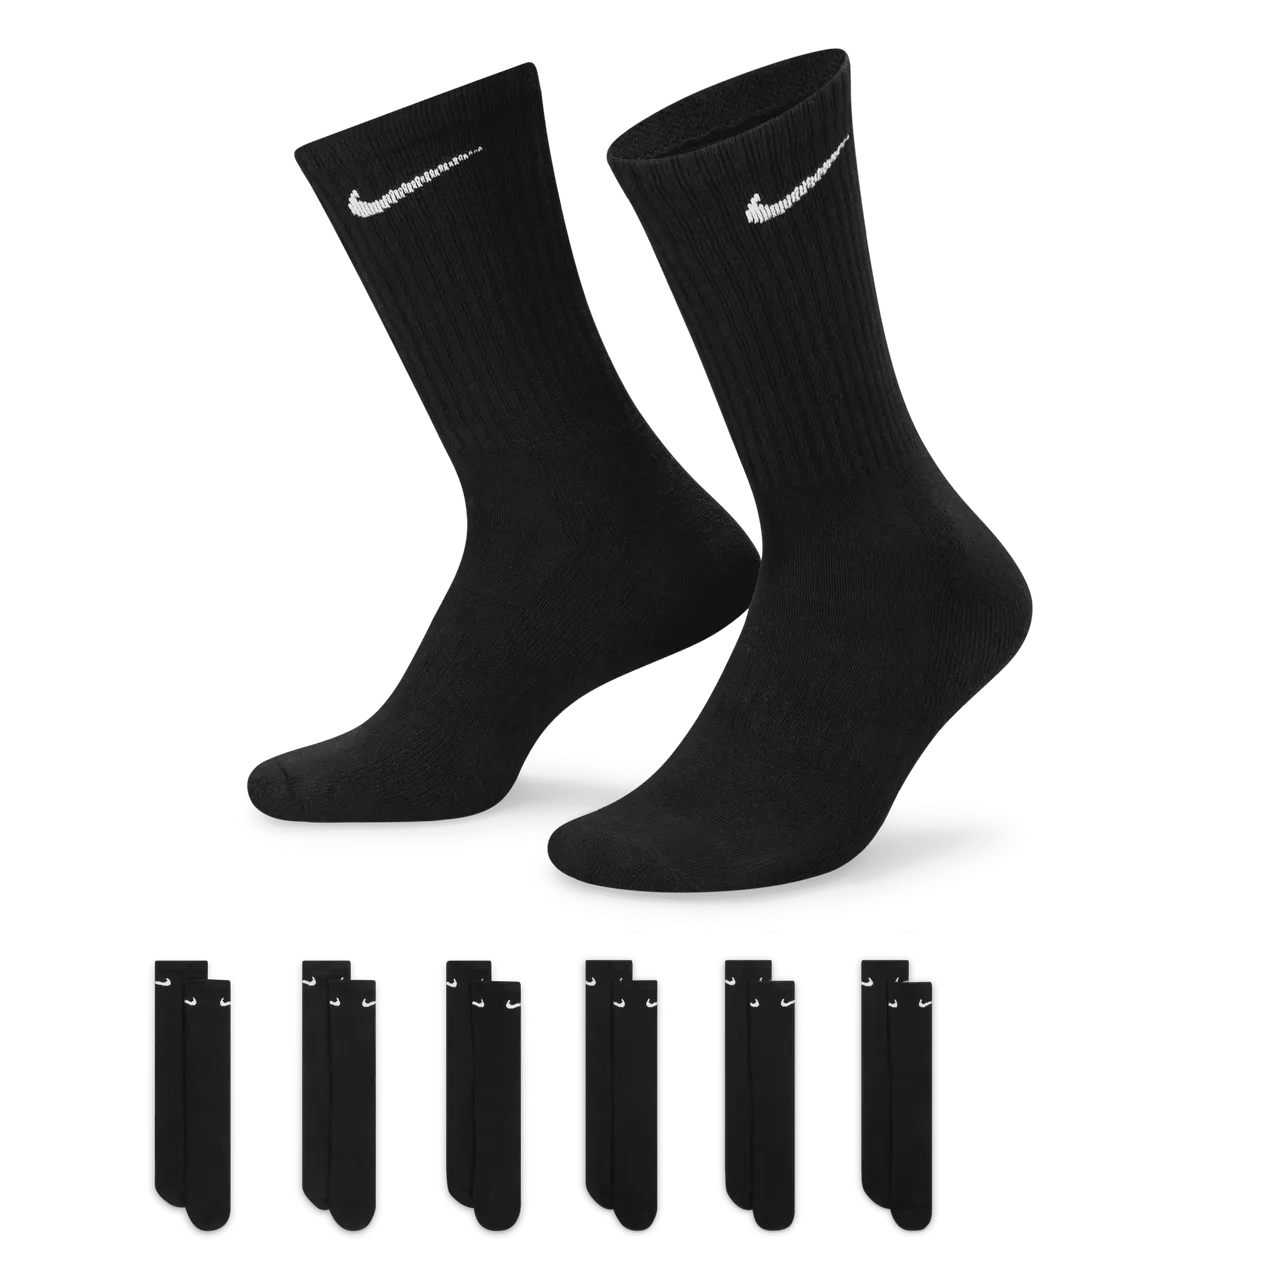 Nike Everyday Cushioned Training Crew Socks (6 Pairs) - Black - Polyester